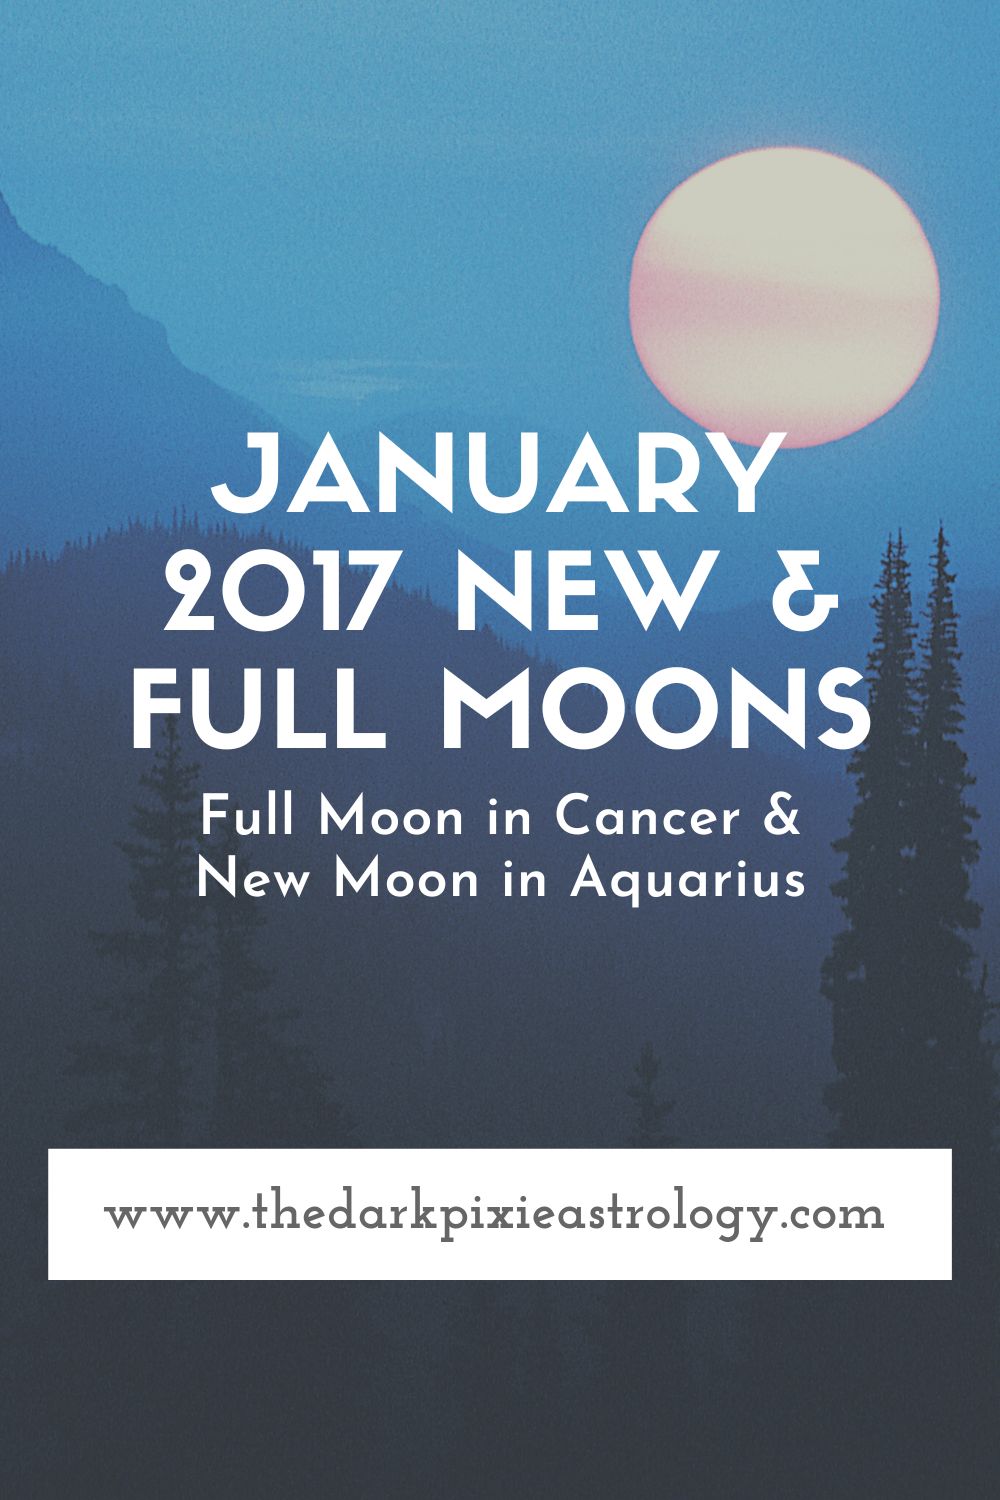 January 2017 New & Full Moons - The Dark Pixie Astrology